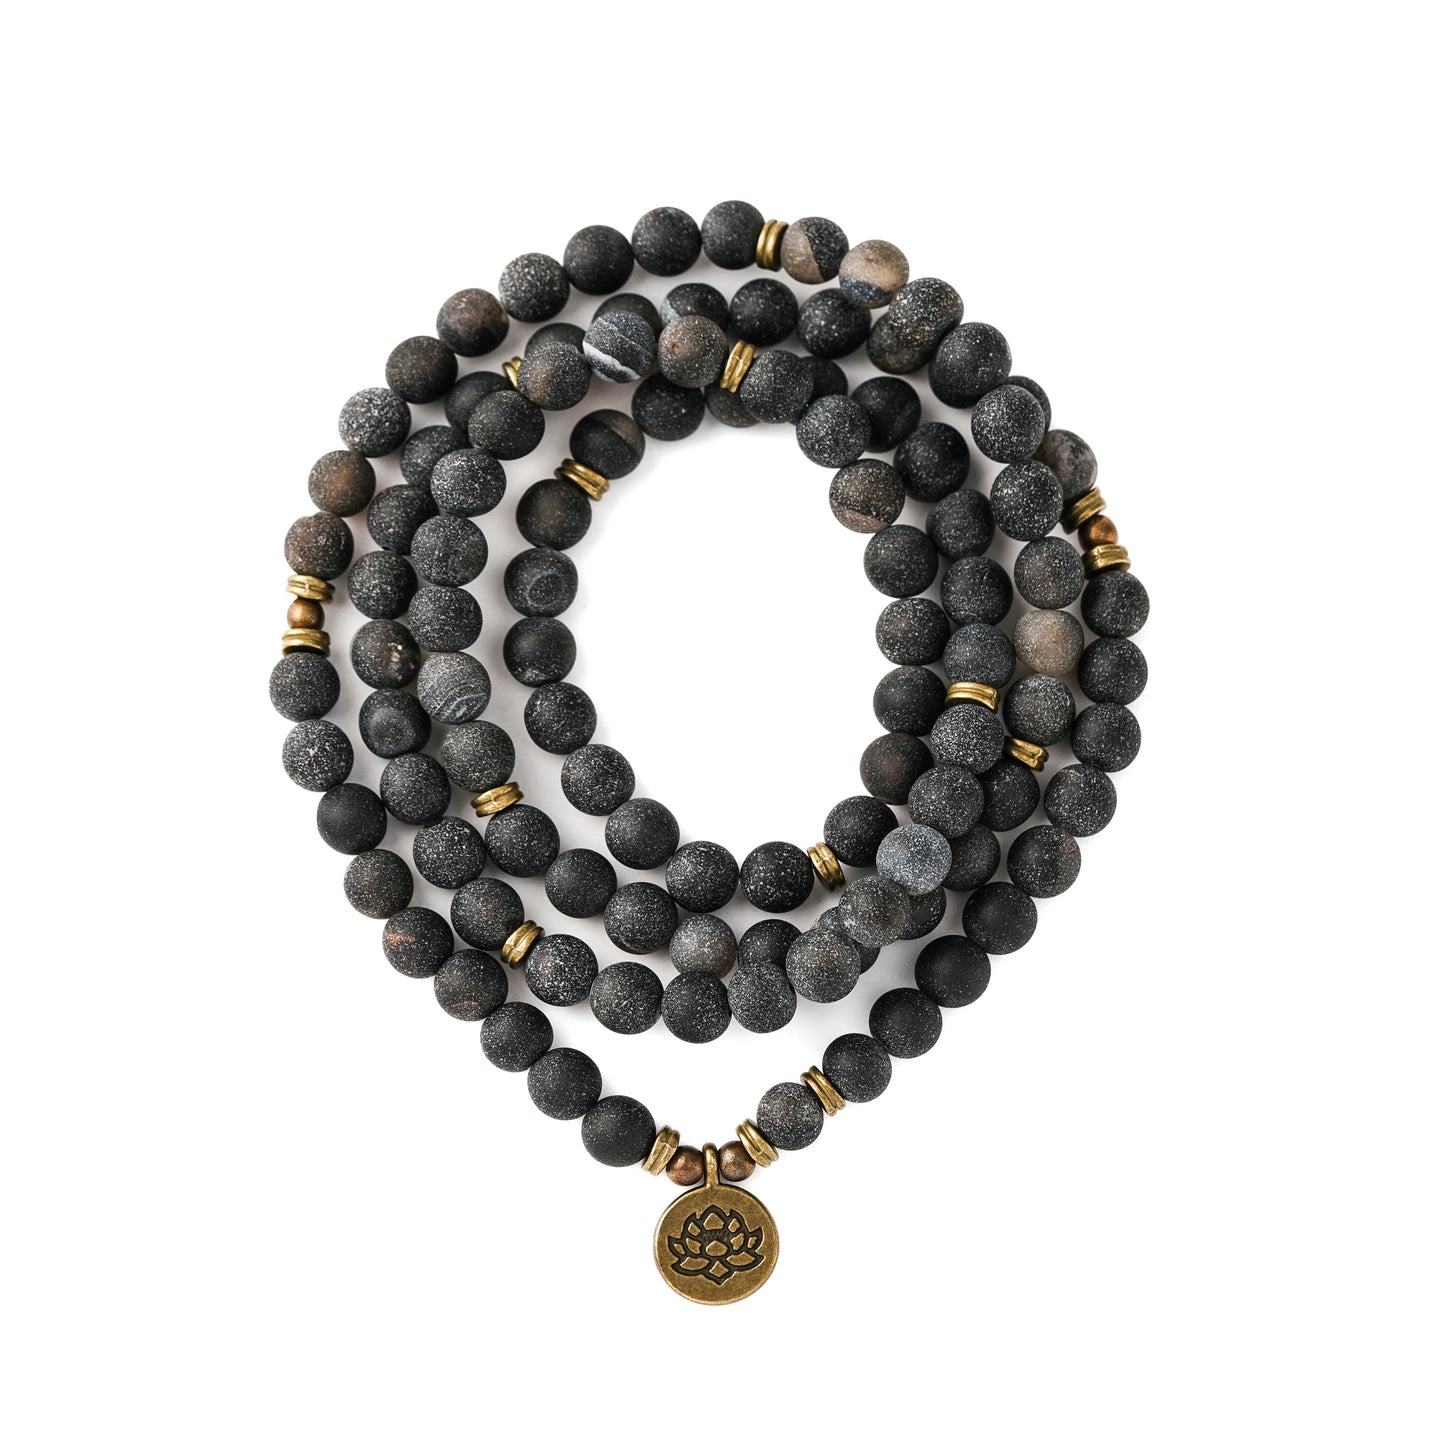 Peace and Harmony - 108 River Stone Mala Beads